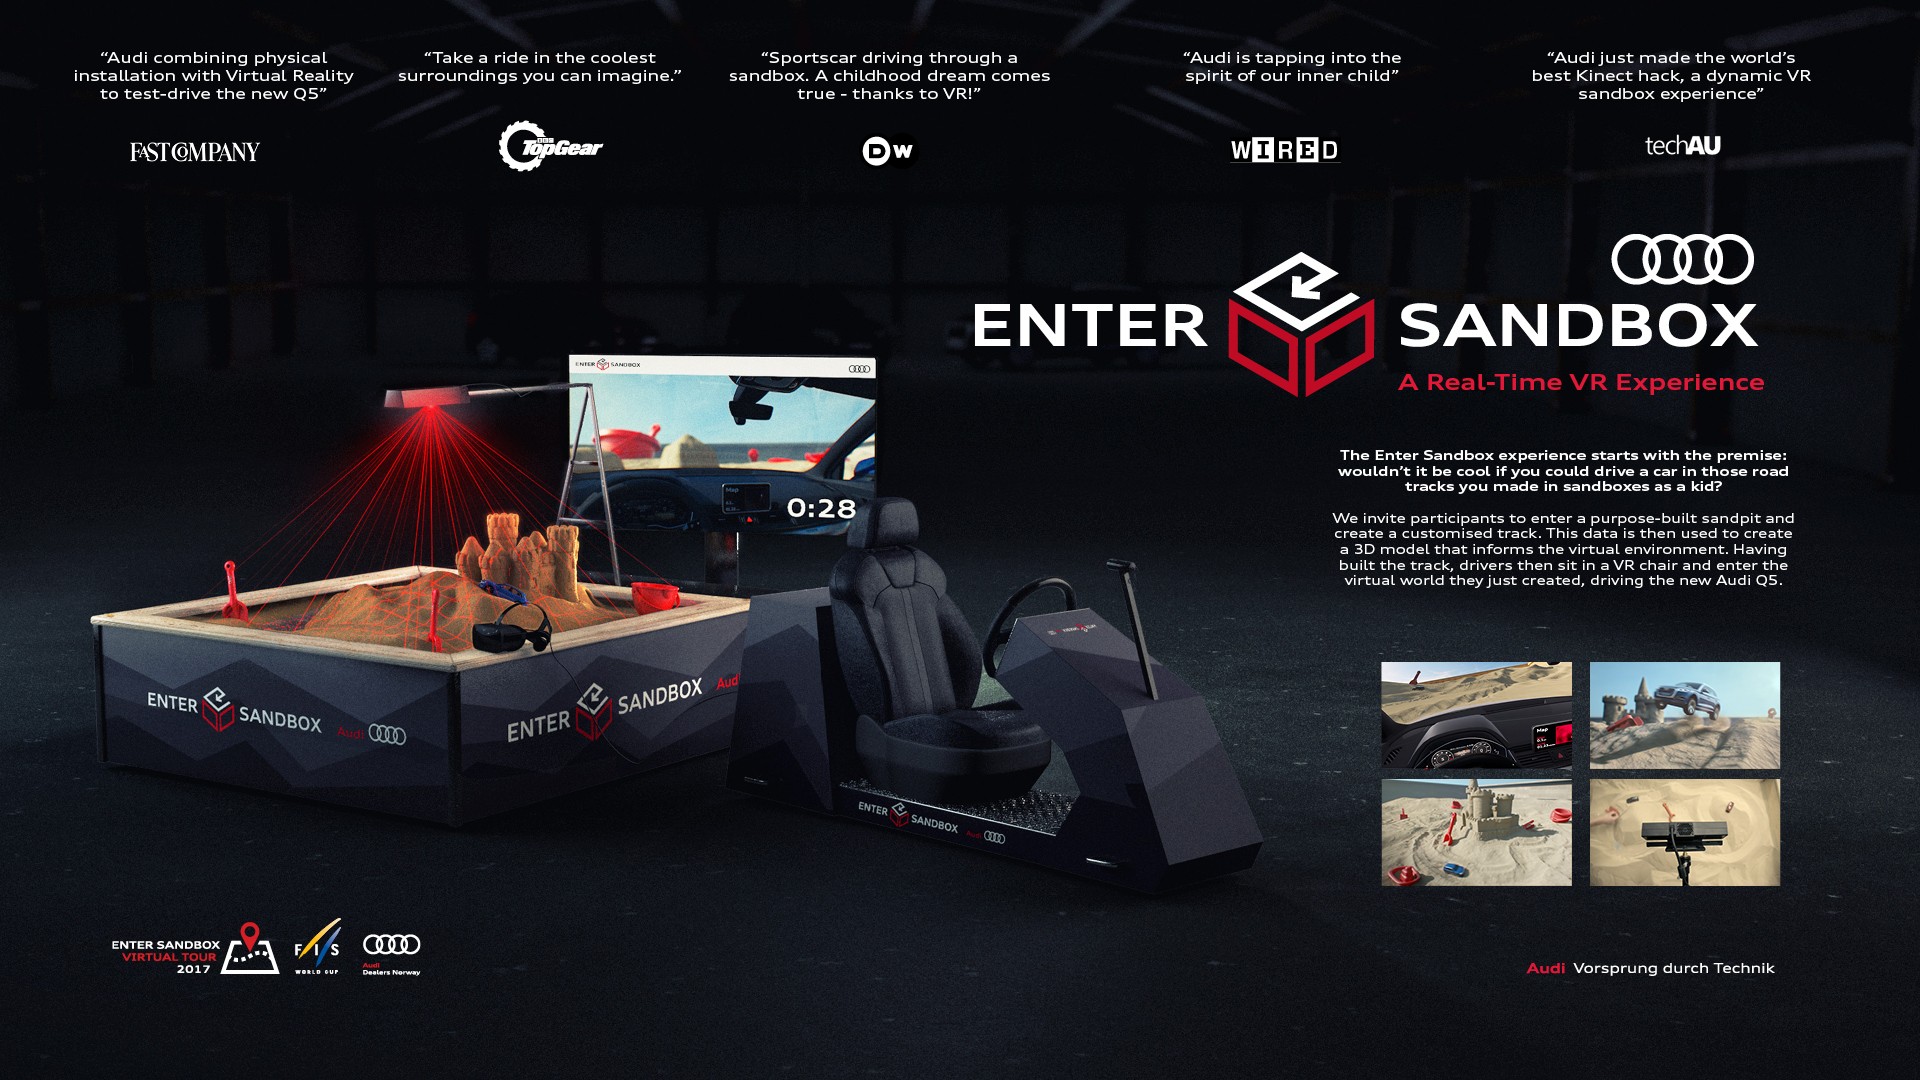 THE ENTER SANDBOX VR EXPERIENCE